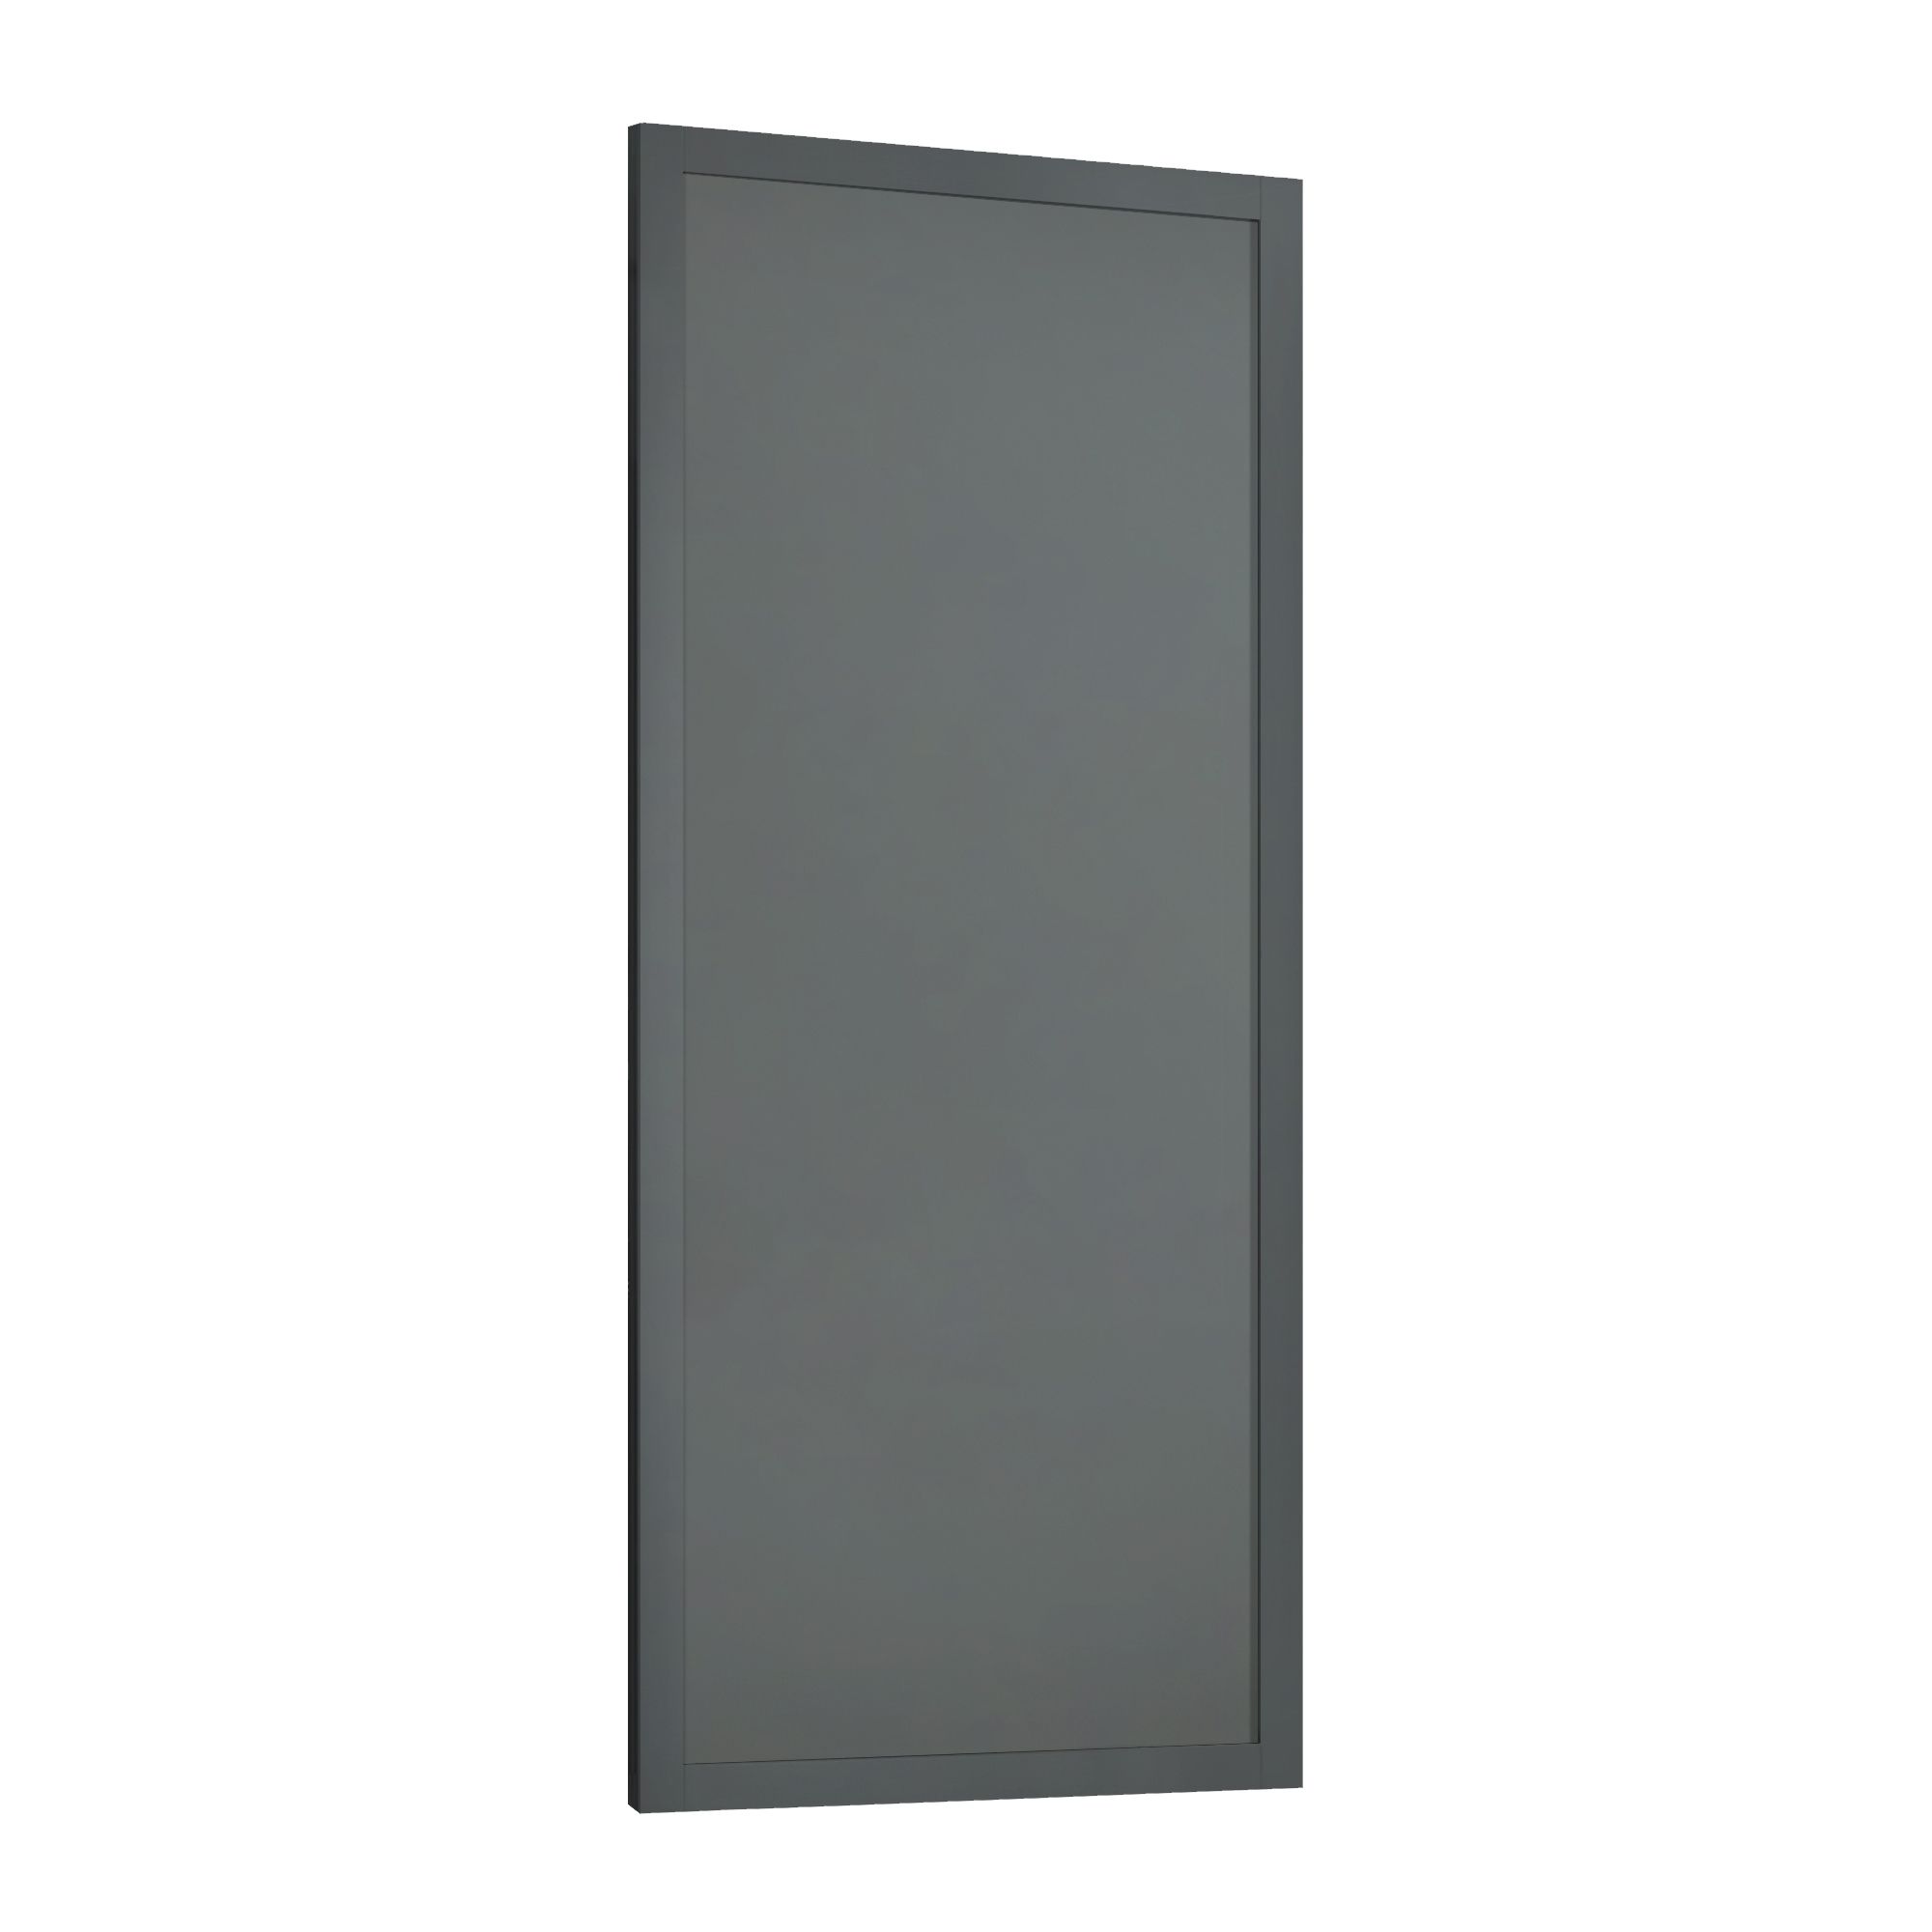 Spacepro Shaker Matt Dark Grey Single panel Sliding wardrobe door (H) 2220mm x (W) 914mm